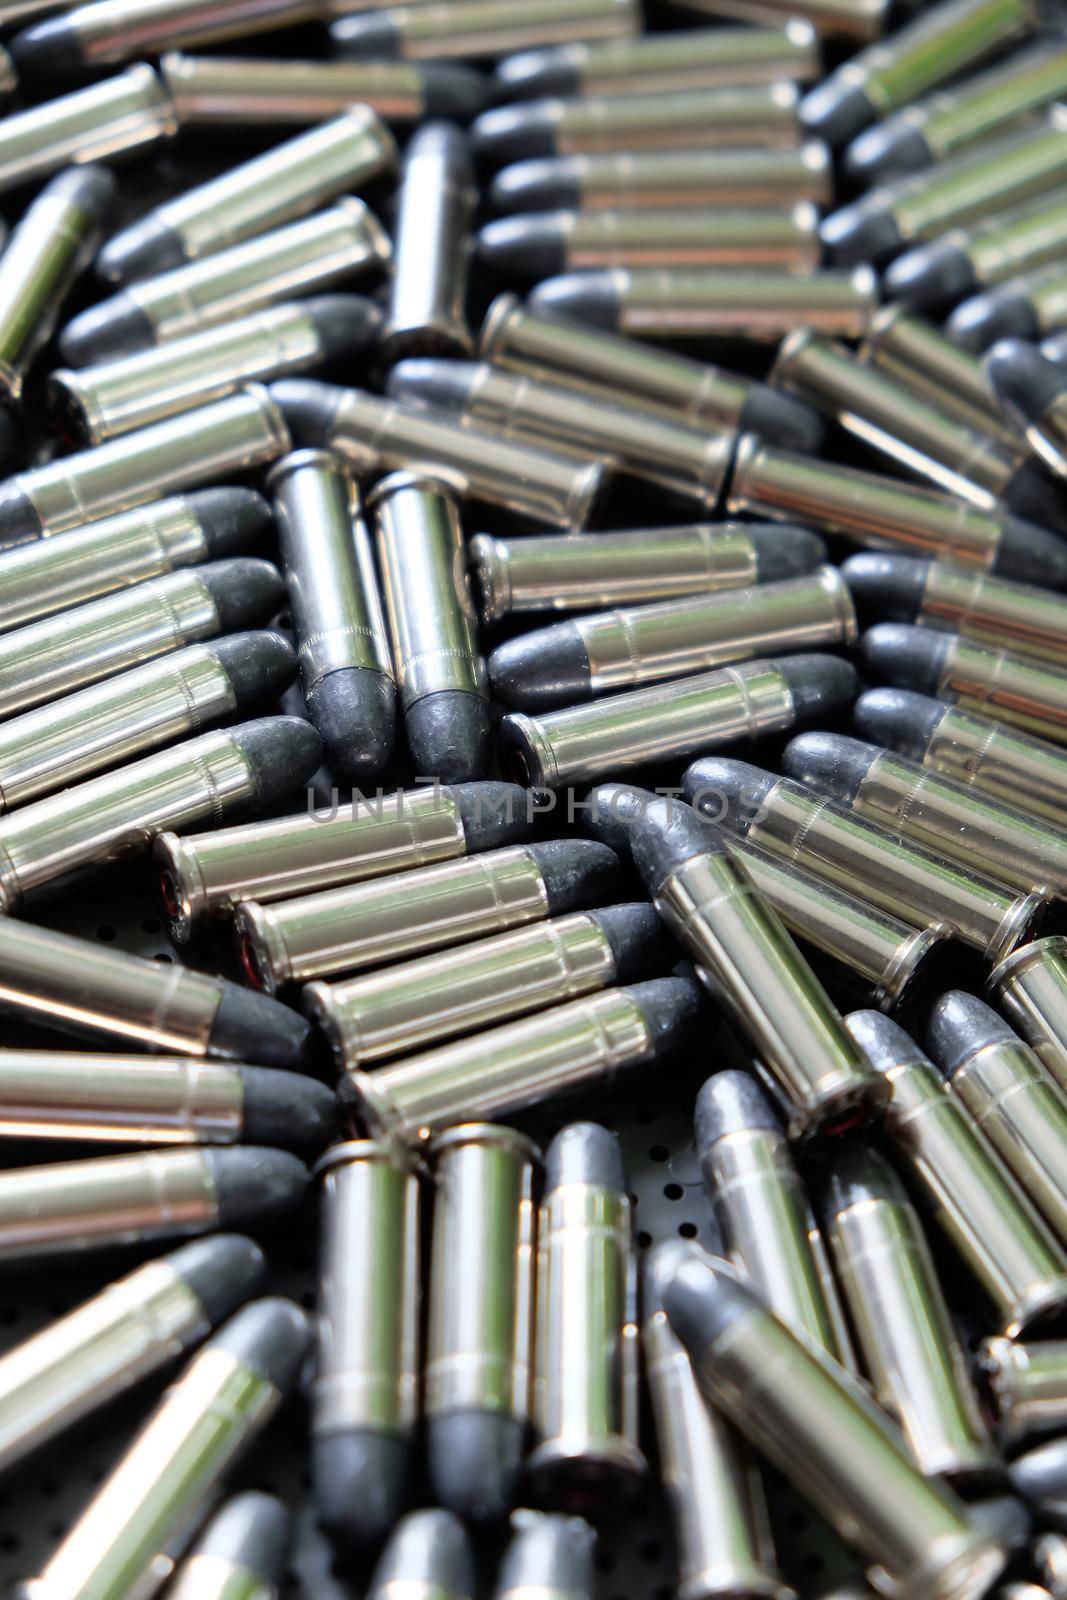 Image of Cartridges of .38 pistols ammo.